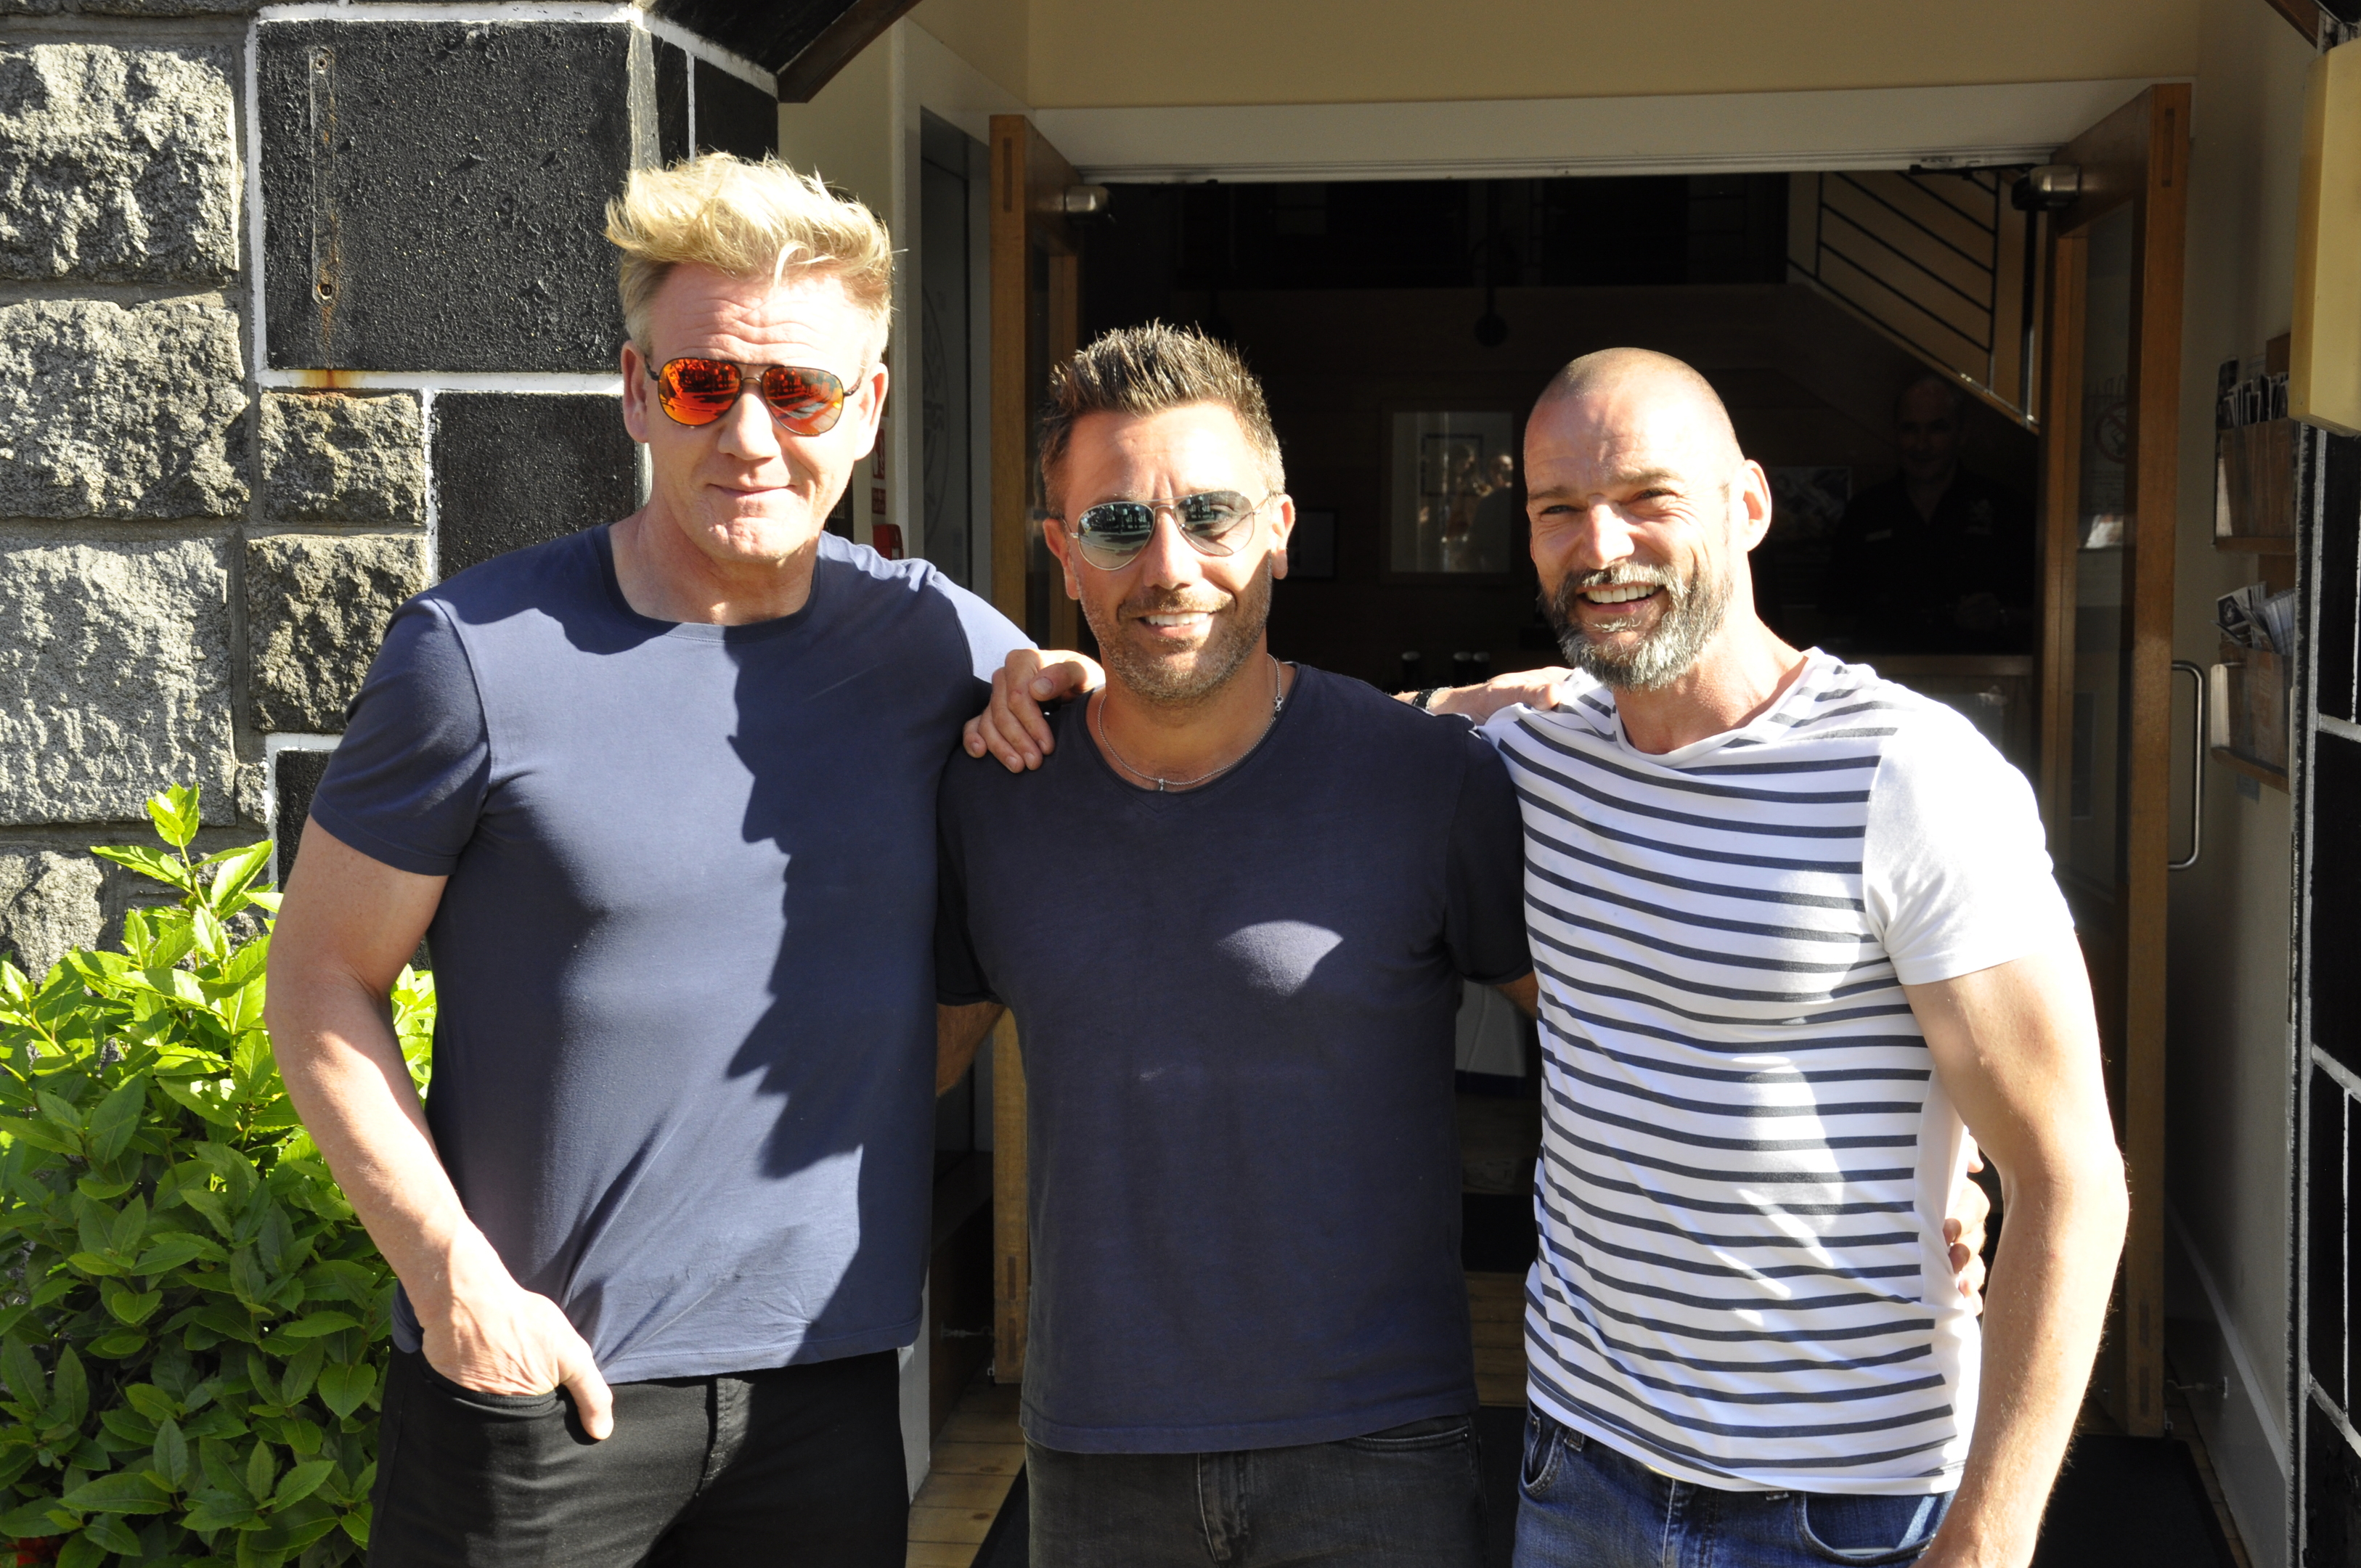 Gordon Ramsay, Fred Sirieix and Gino D'Acampo enjoy their stay in Oban ...